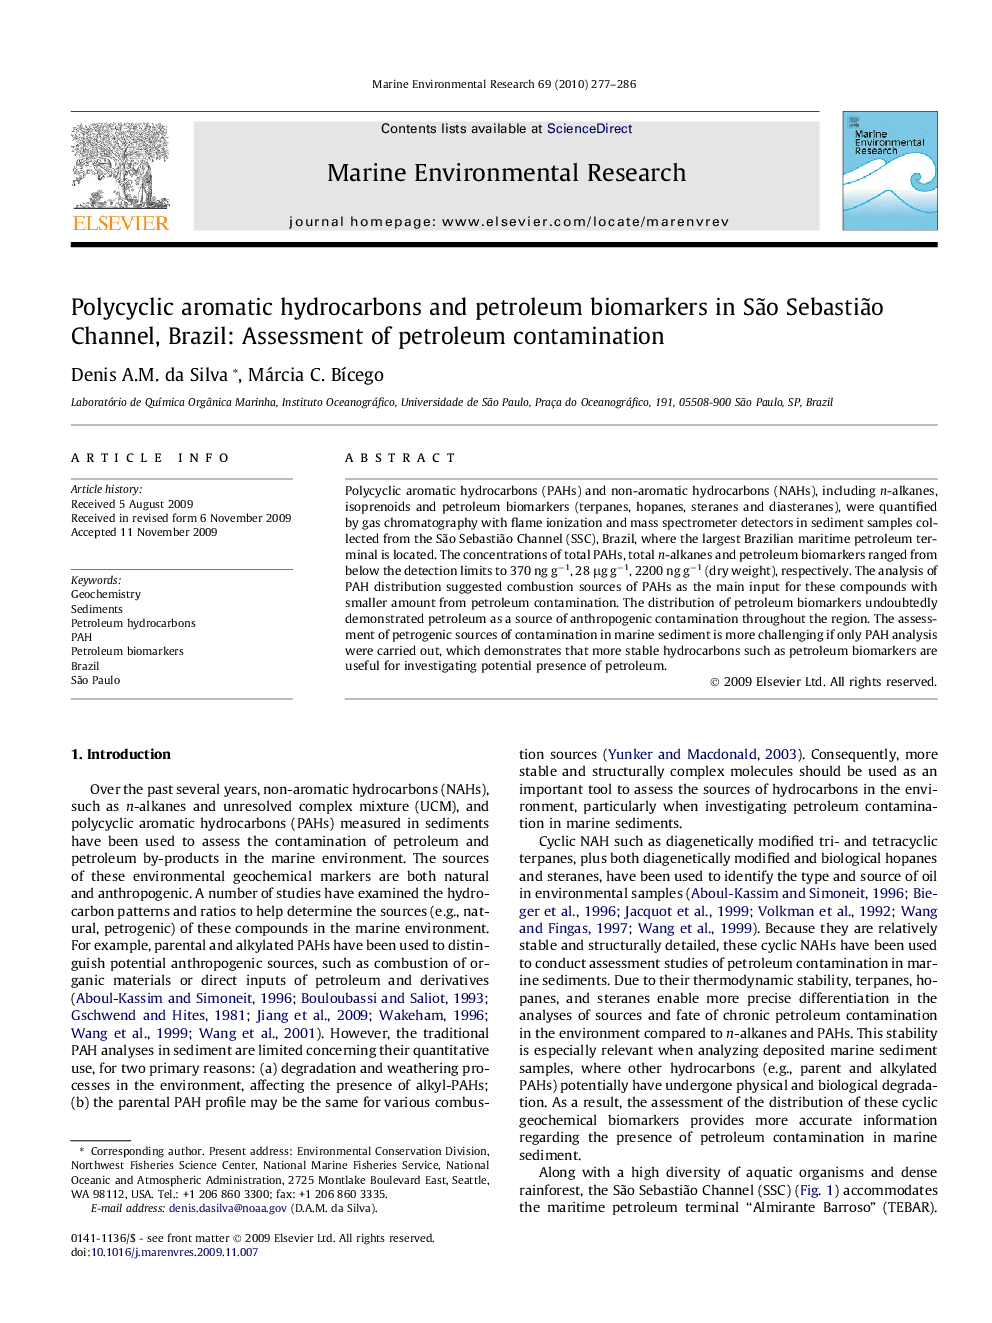 Polycyclic aromatic hydrocarbons and petroleum biomarkers in São Sebastião Channel, Brazil: Assessment of petroleum contamination